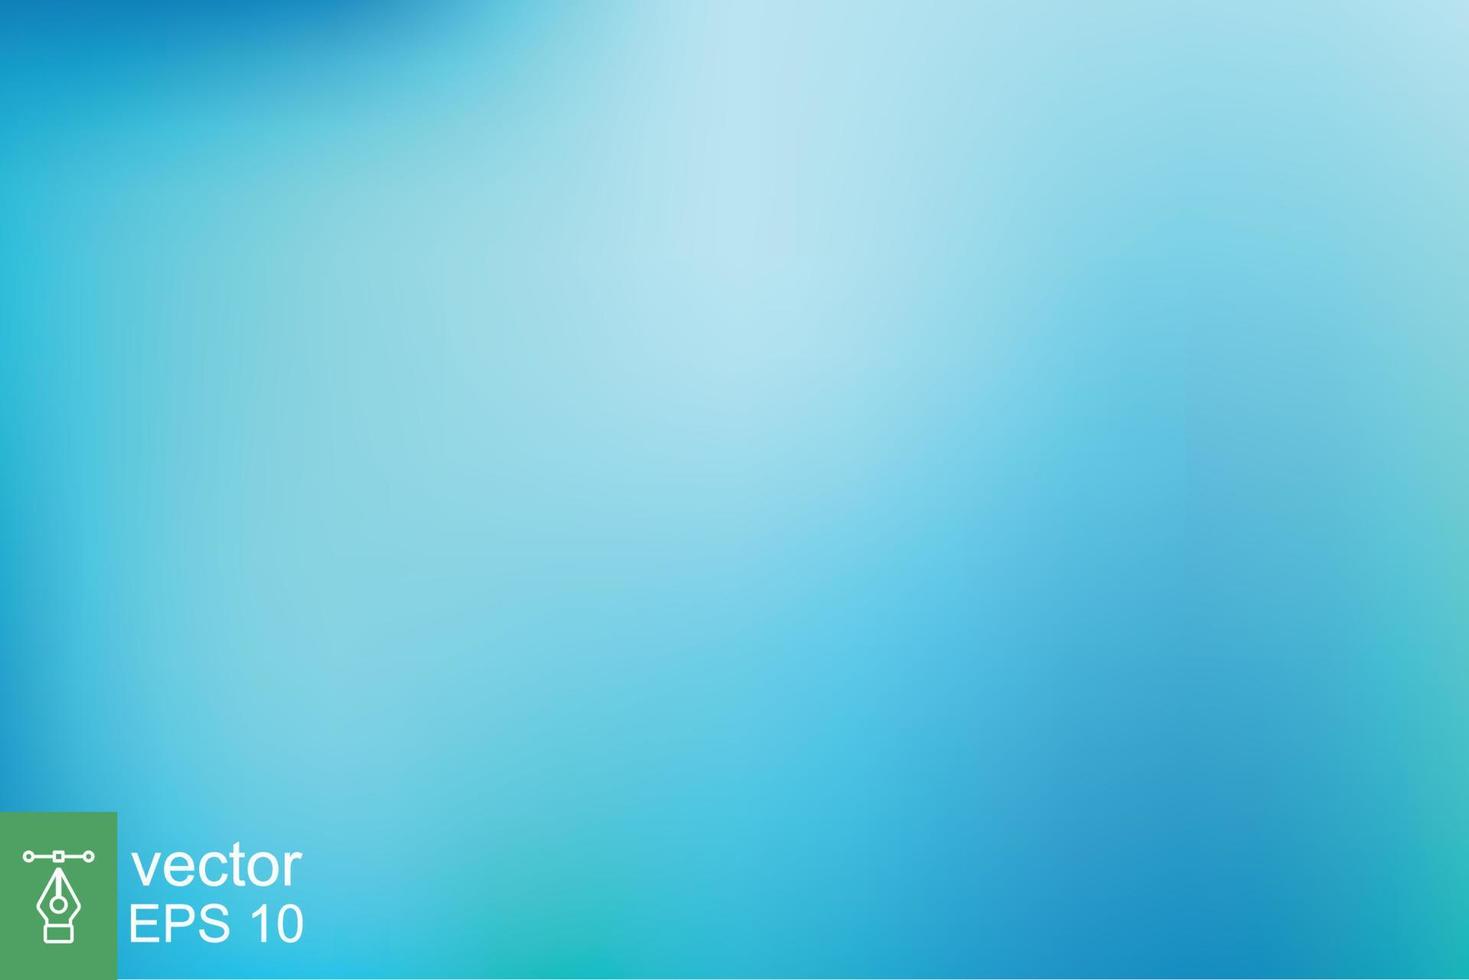 fondo degradado verde azulado abstracto. telón de fondo de agua turquesa borrosa. verde claro, suave, océano, mar, naturaleza. ilustración vectorial para su diseño gráfico, pancarta, afiche de verano o acuático. eps 10. vector